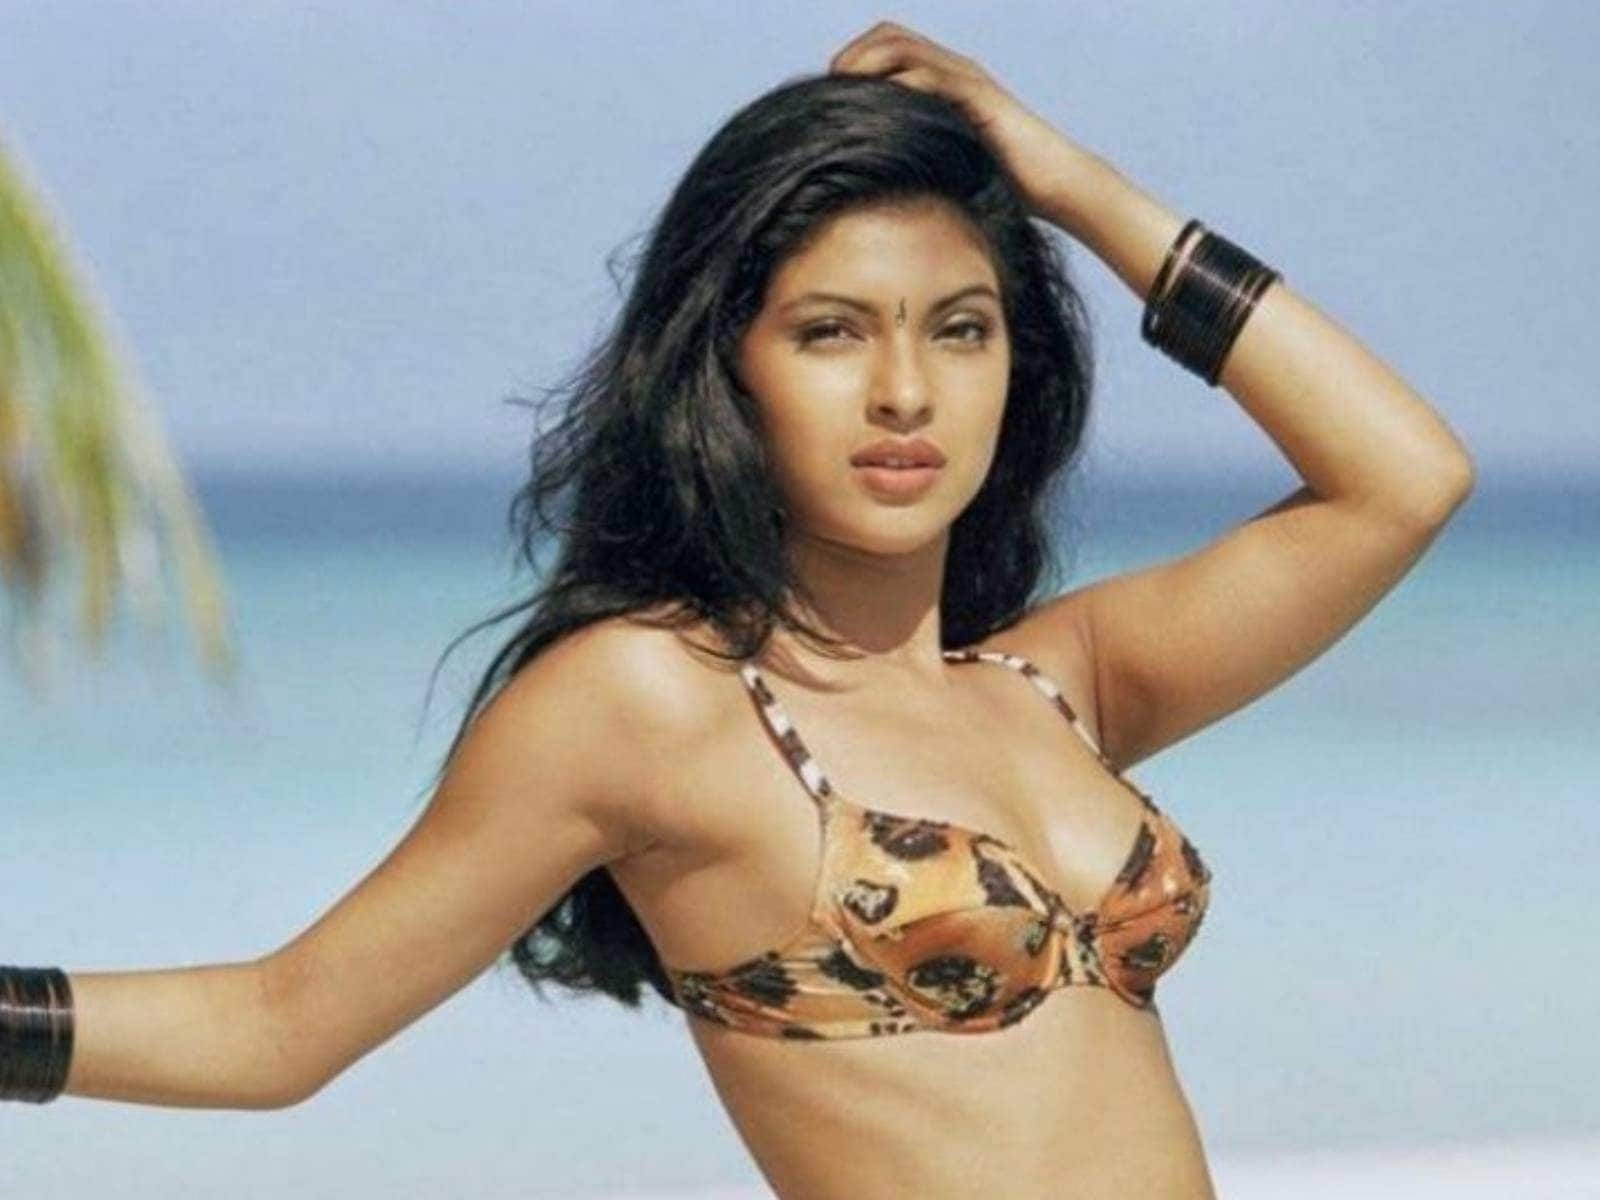 Priyanka Chopra Nanga Photo - Priyanka Chopra Shares Bikini-clad Throwback Photo From 2000, Check Out The  Diva's Smouldering Swimwear Pictures - News18